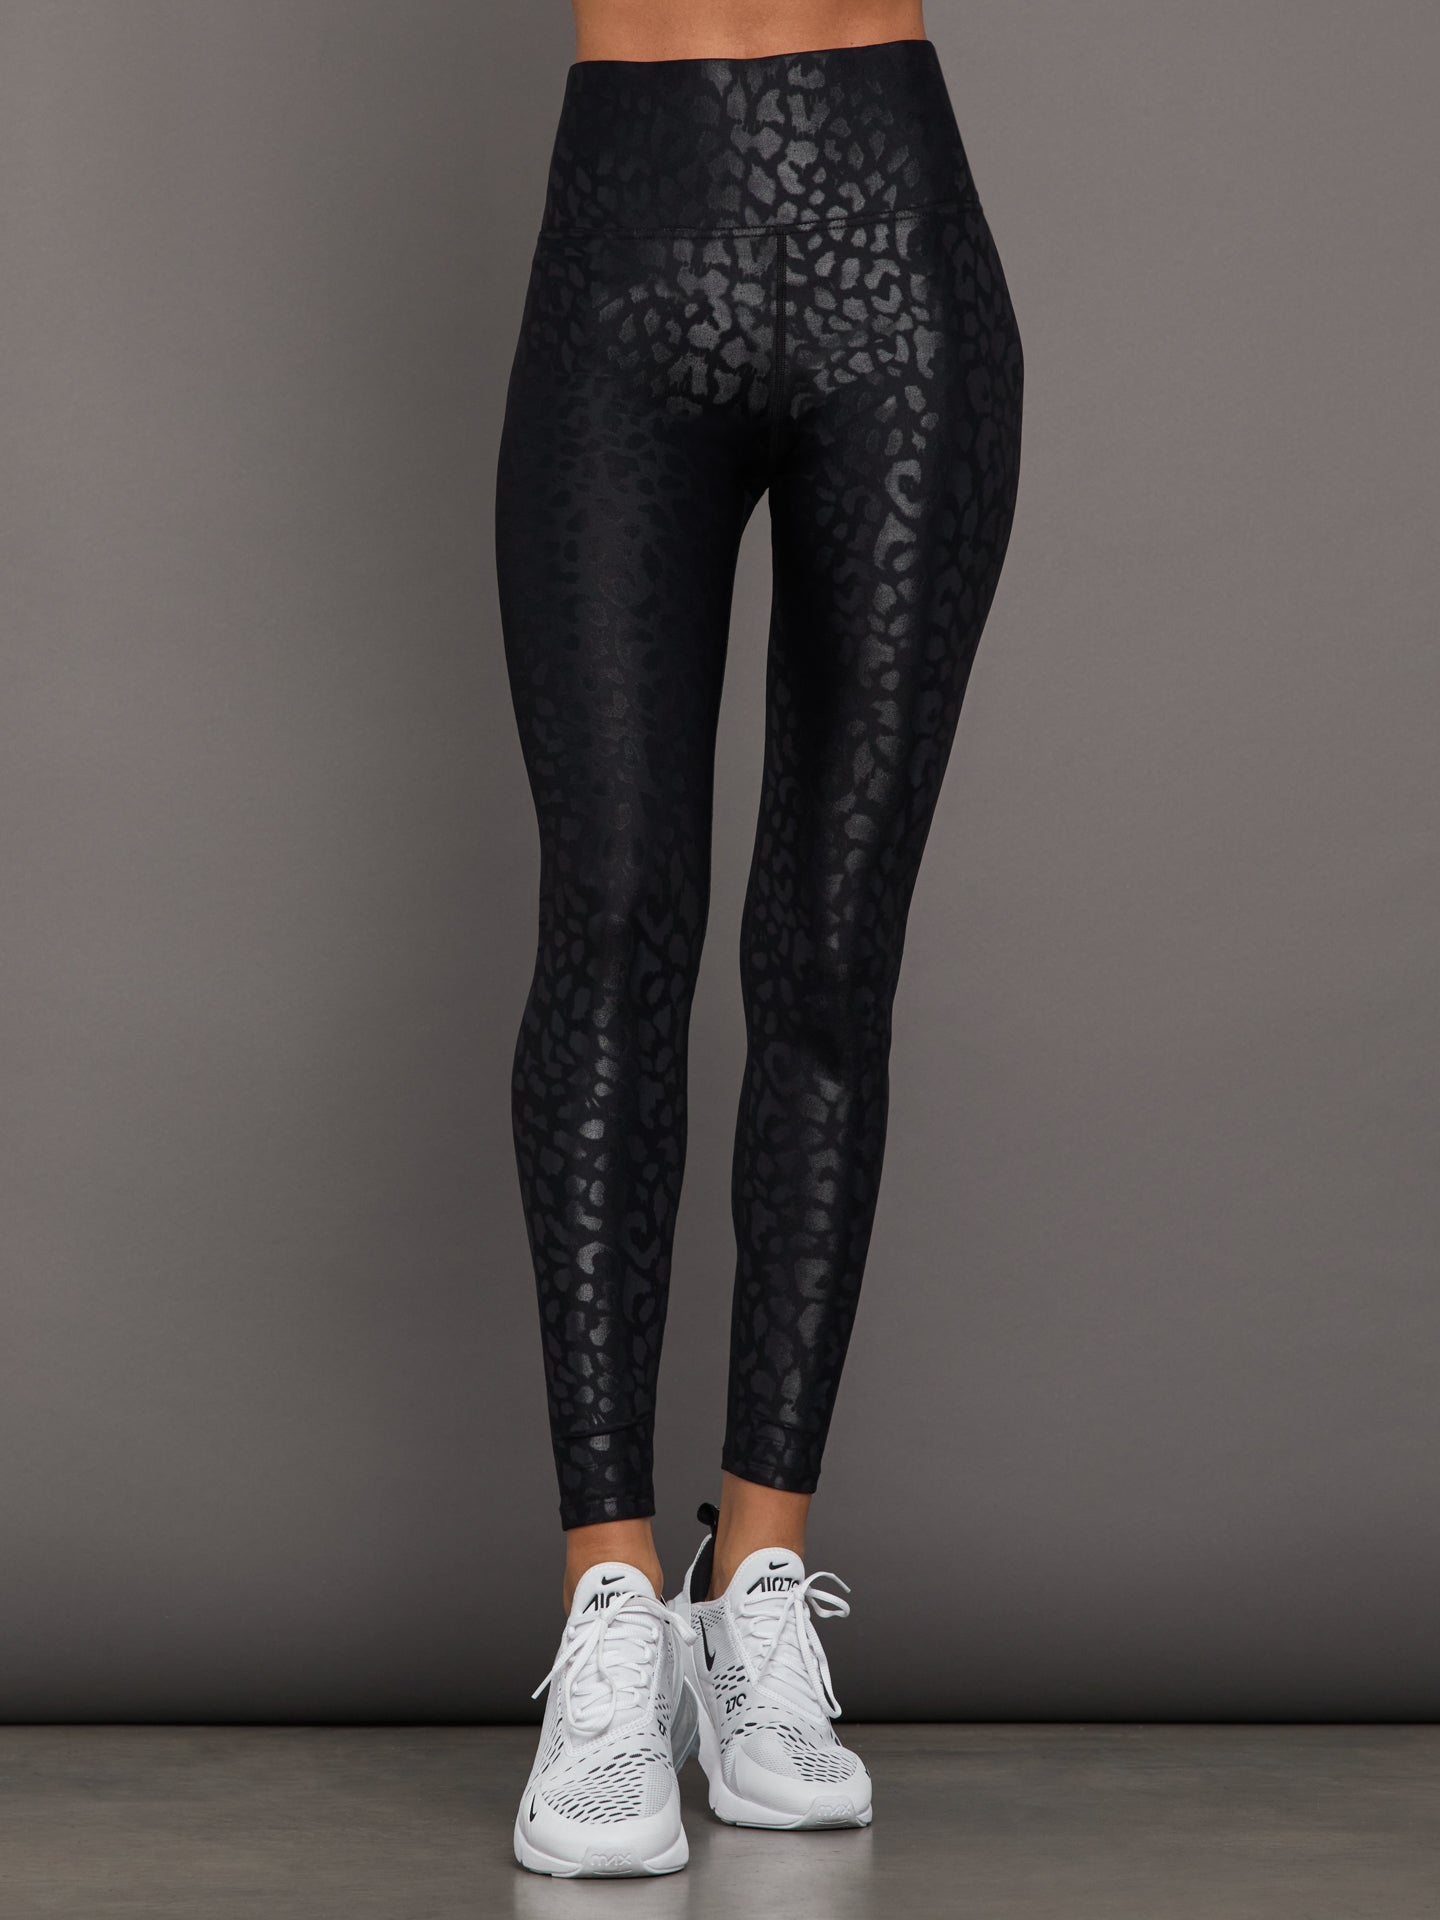 Citta Activewear. High Rise 7/8 Tights – Black Leopard. We love